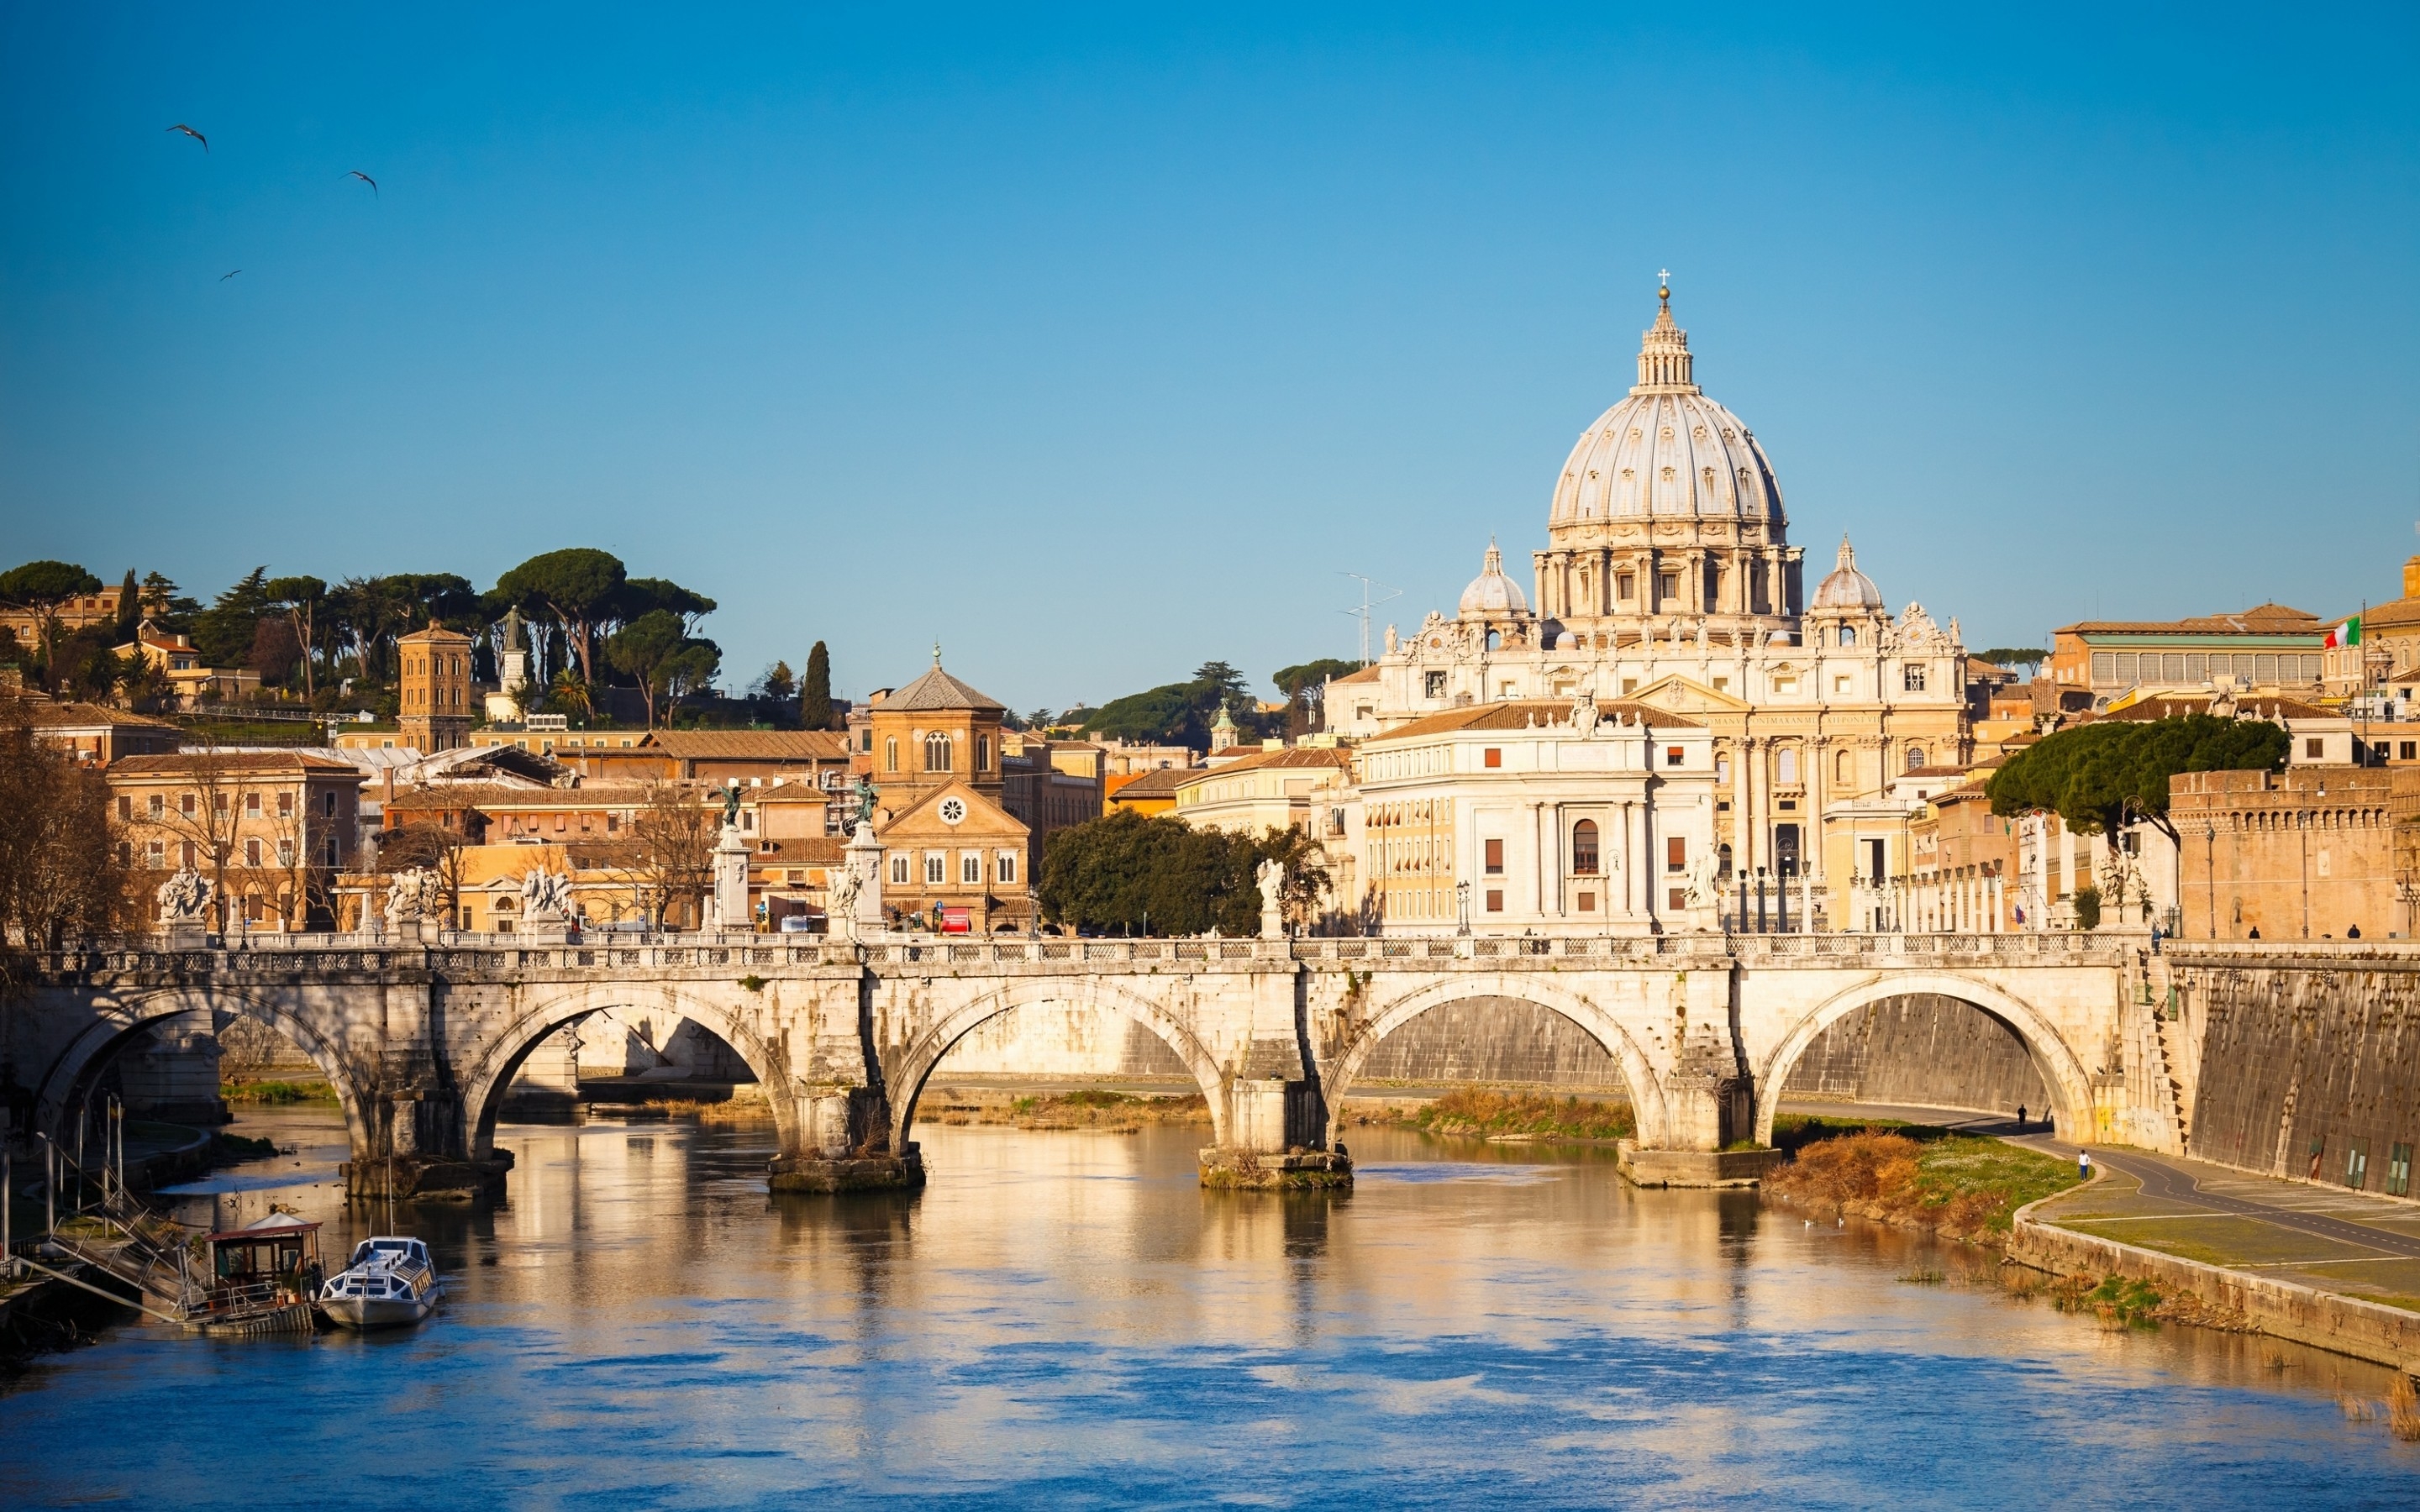 Bridge View Rome for 2880 x 1800 Retina Display resolution